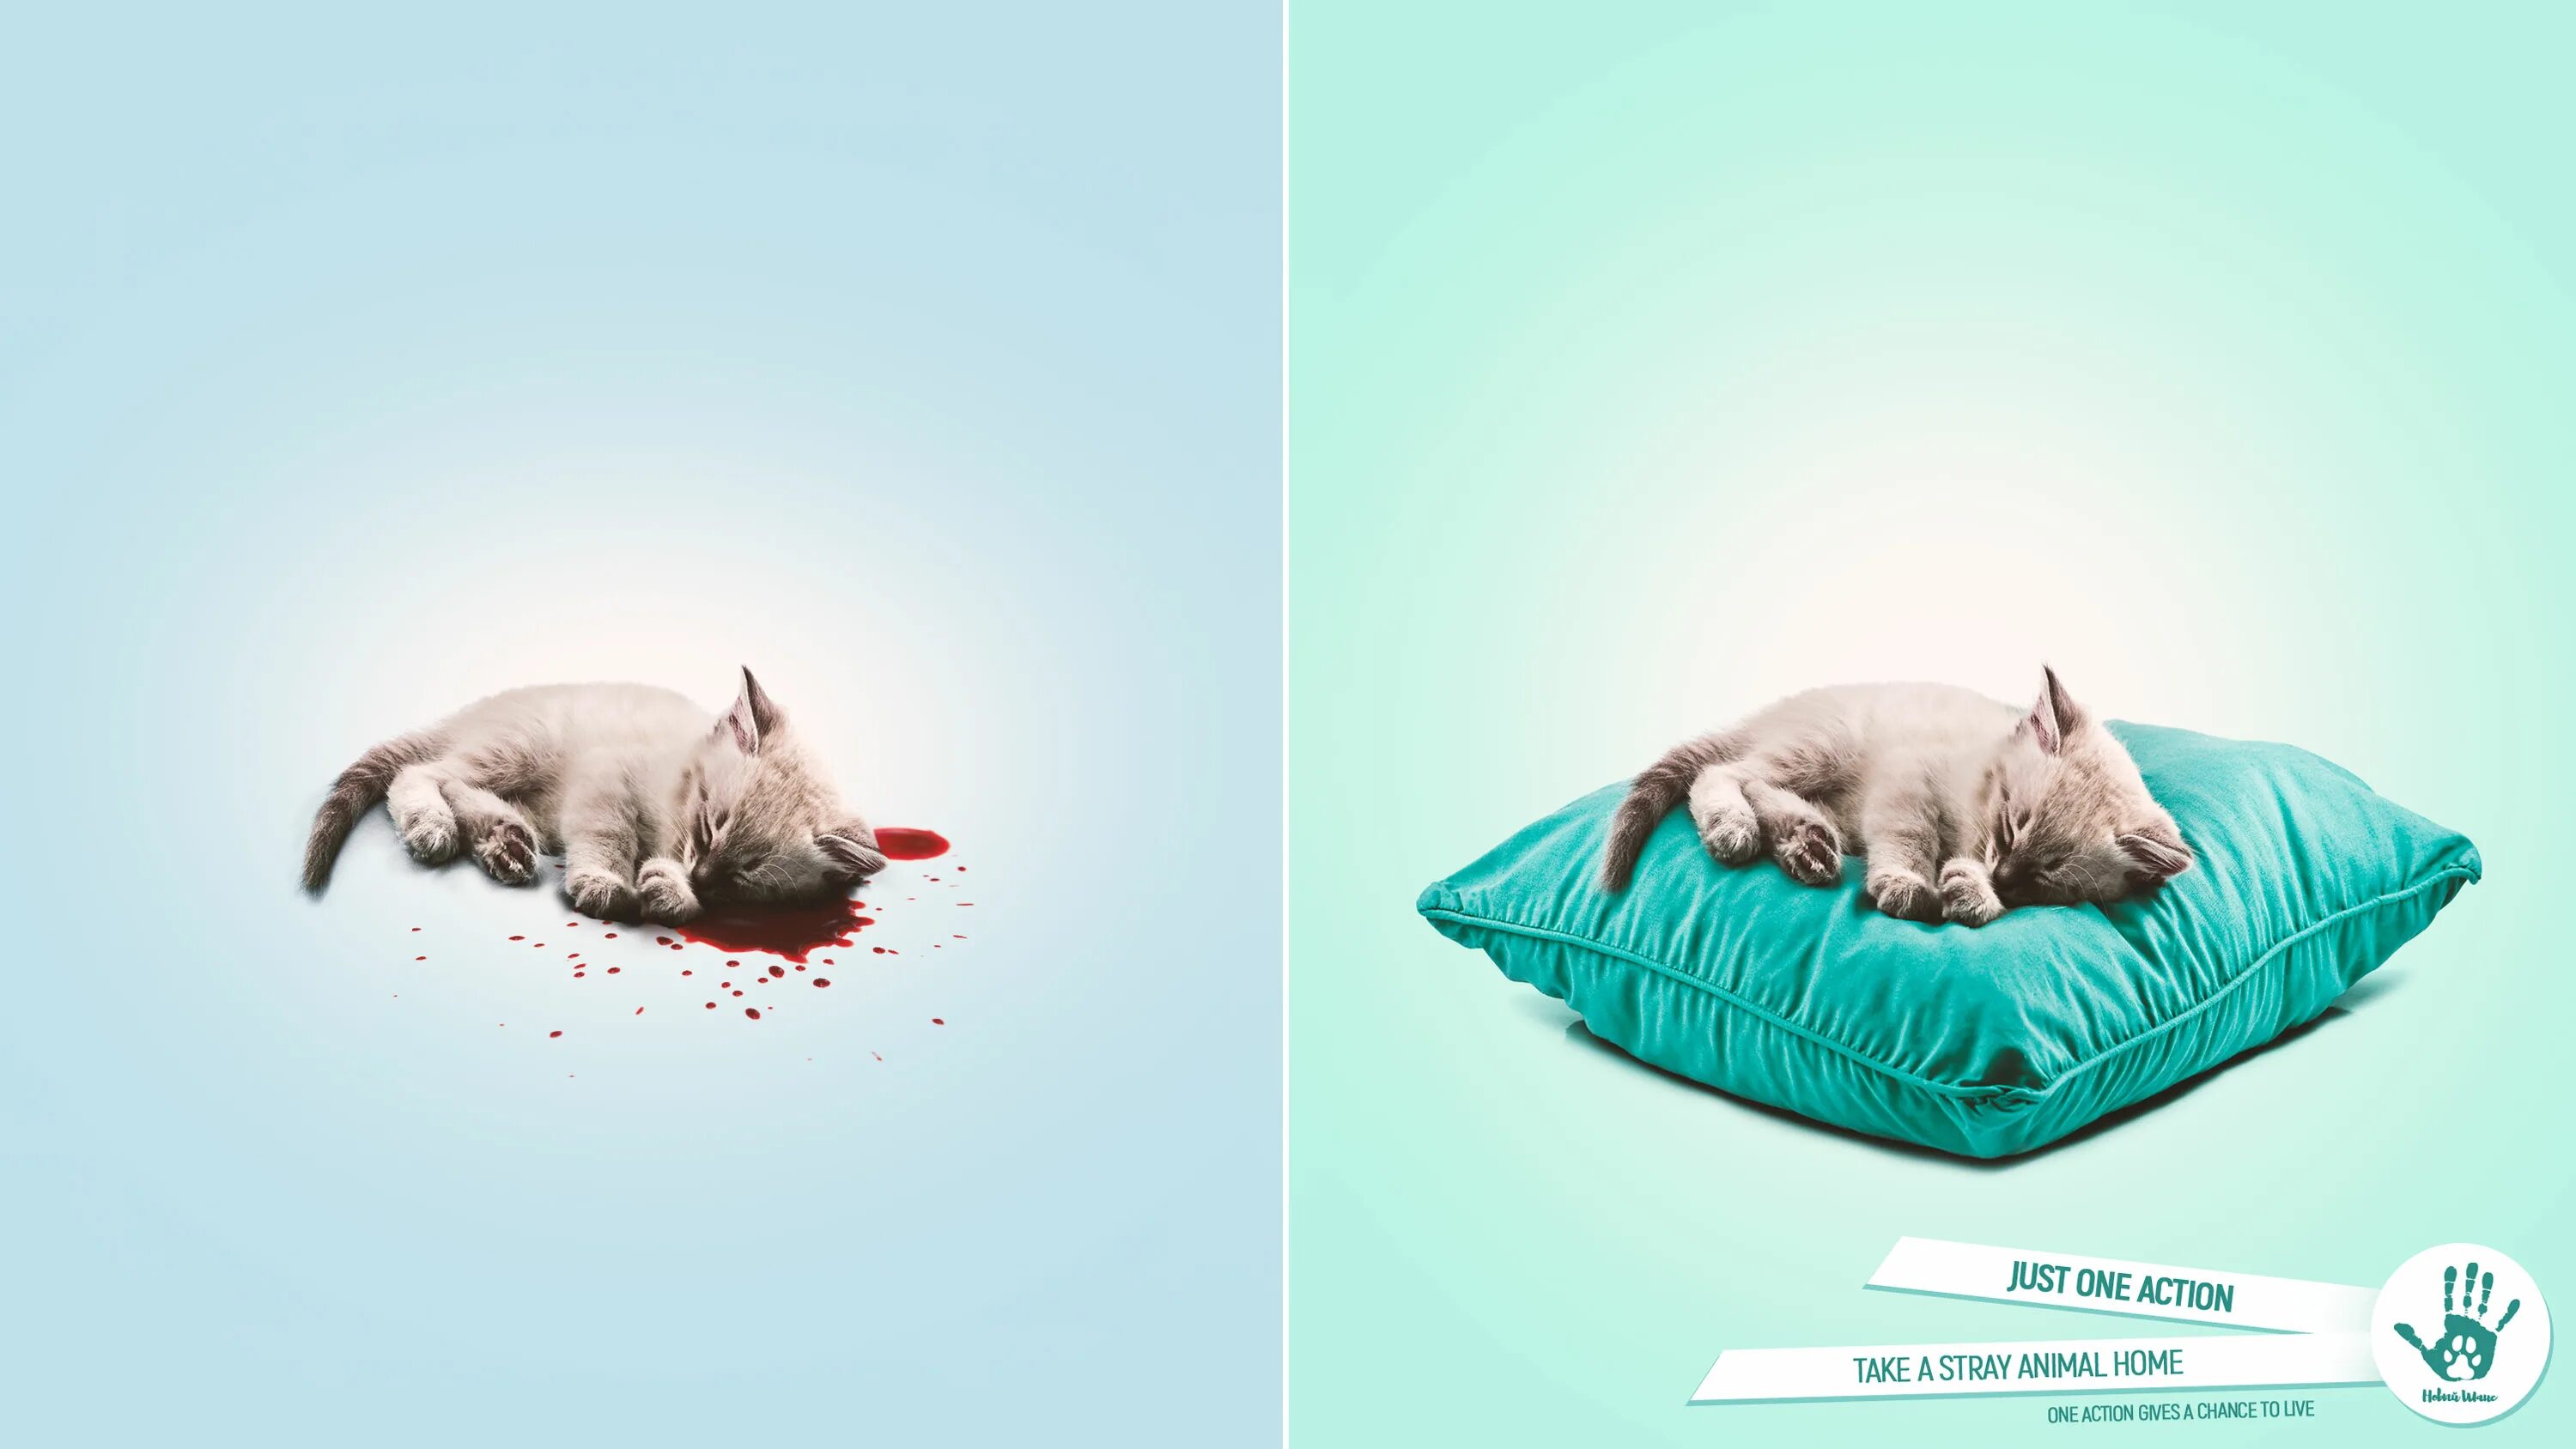 Some animals go to a shelter. Реклама с животными. Социальная реклама животные. Социальная реклама про бездомных животных. Stray animals.